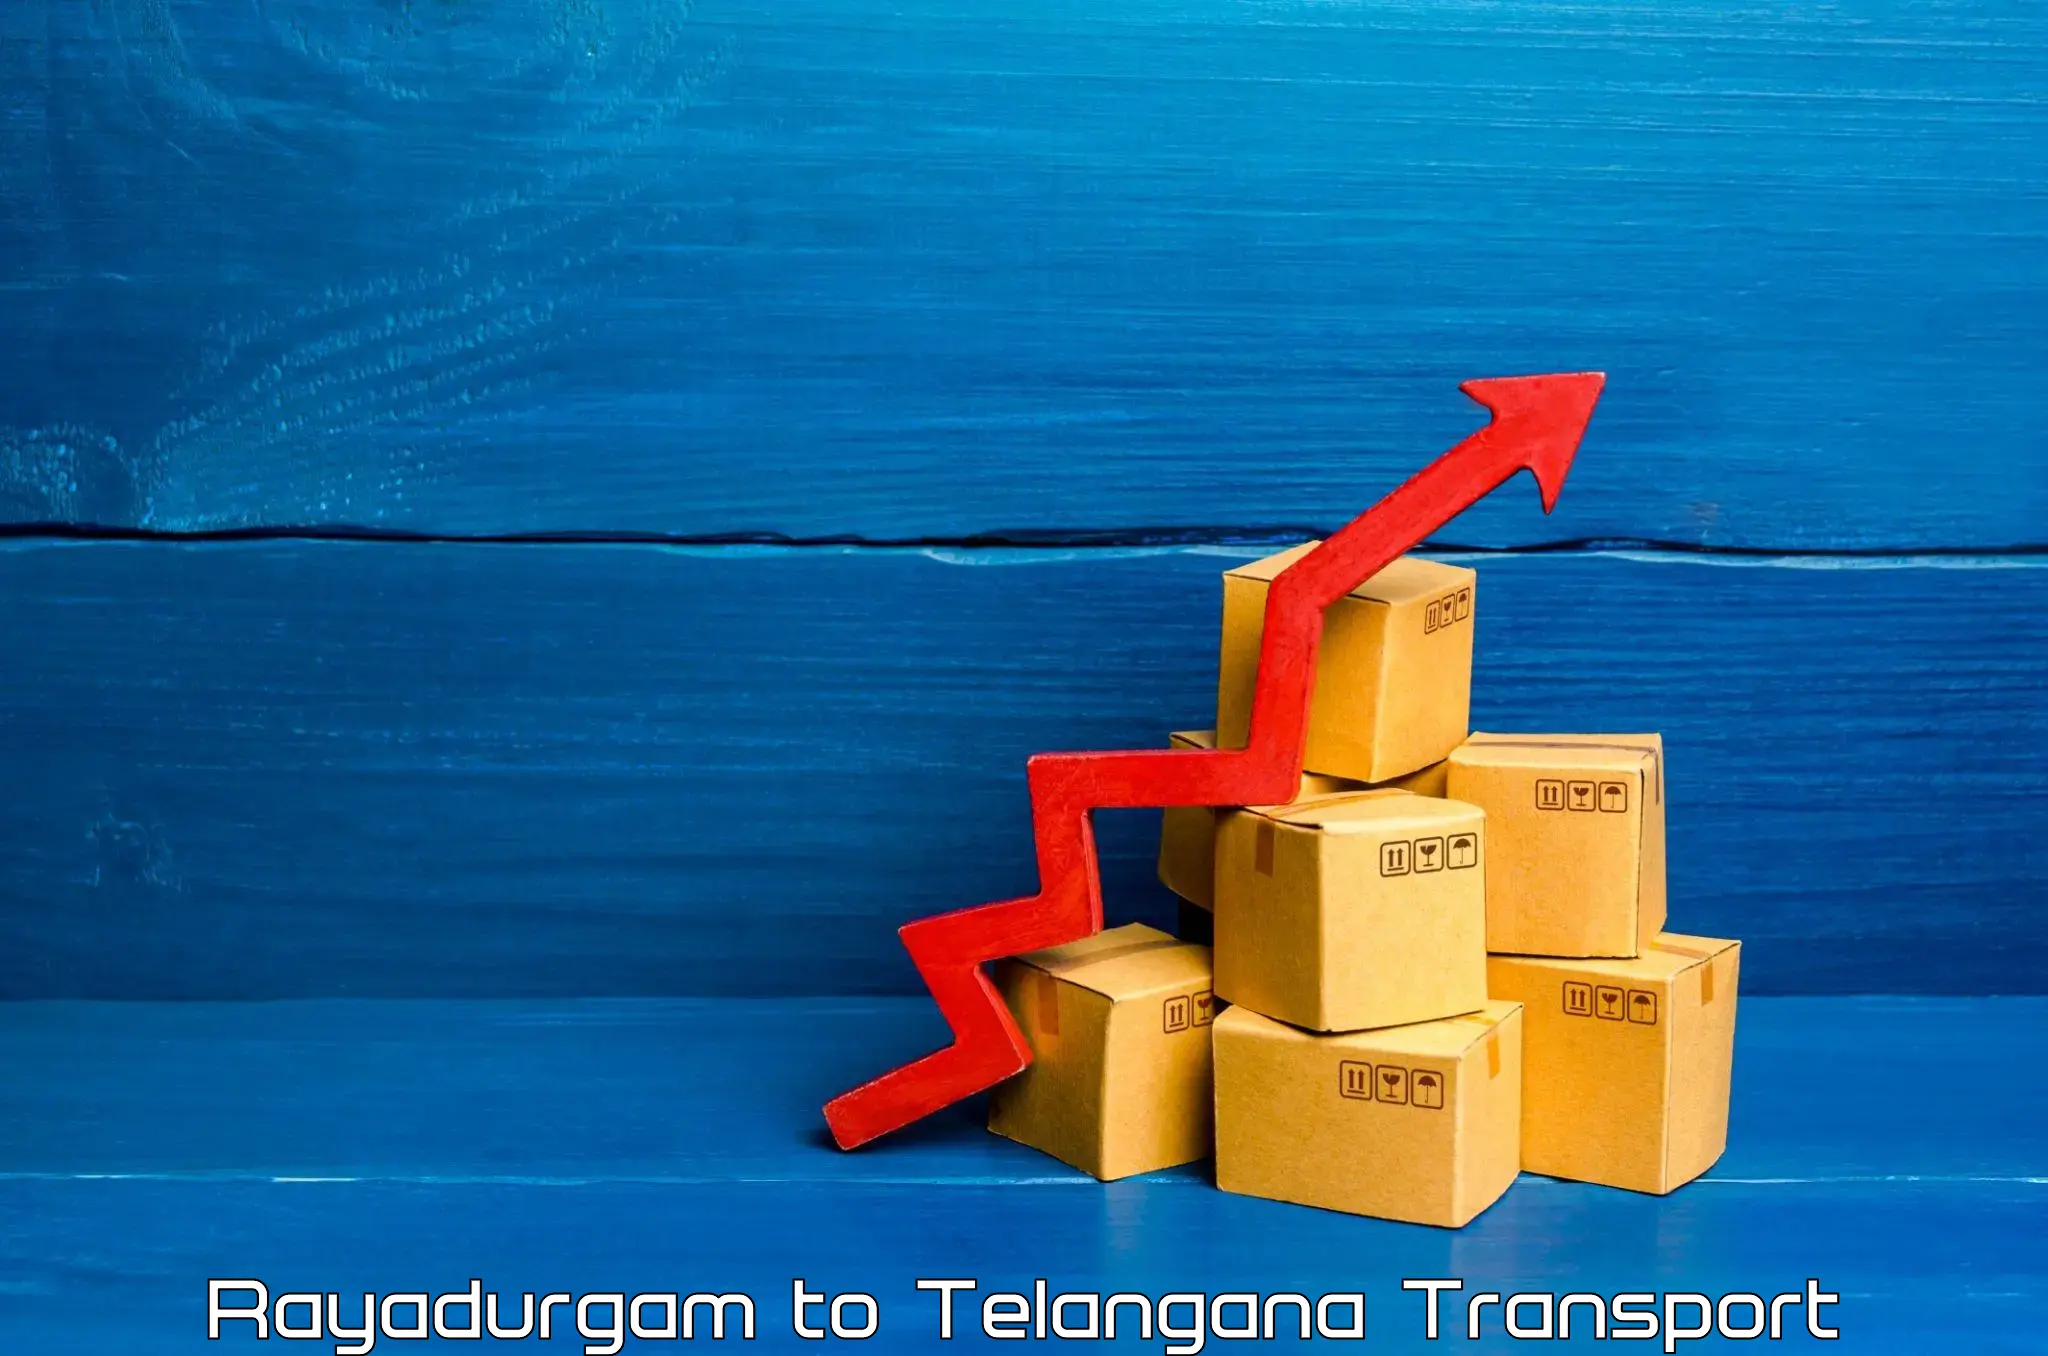 Transport shared services in Rayadurgam to Yellandu